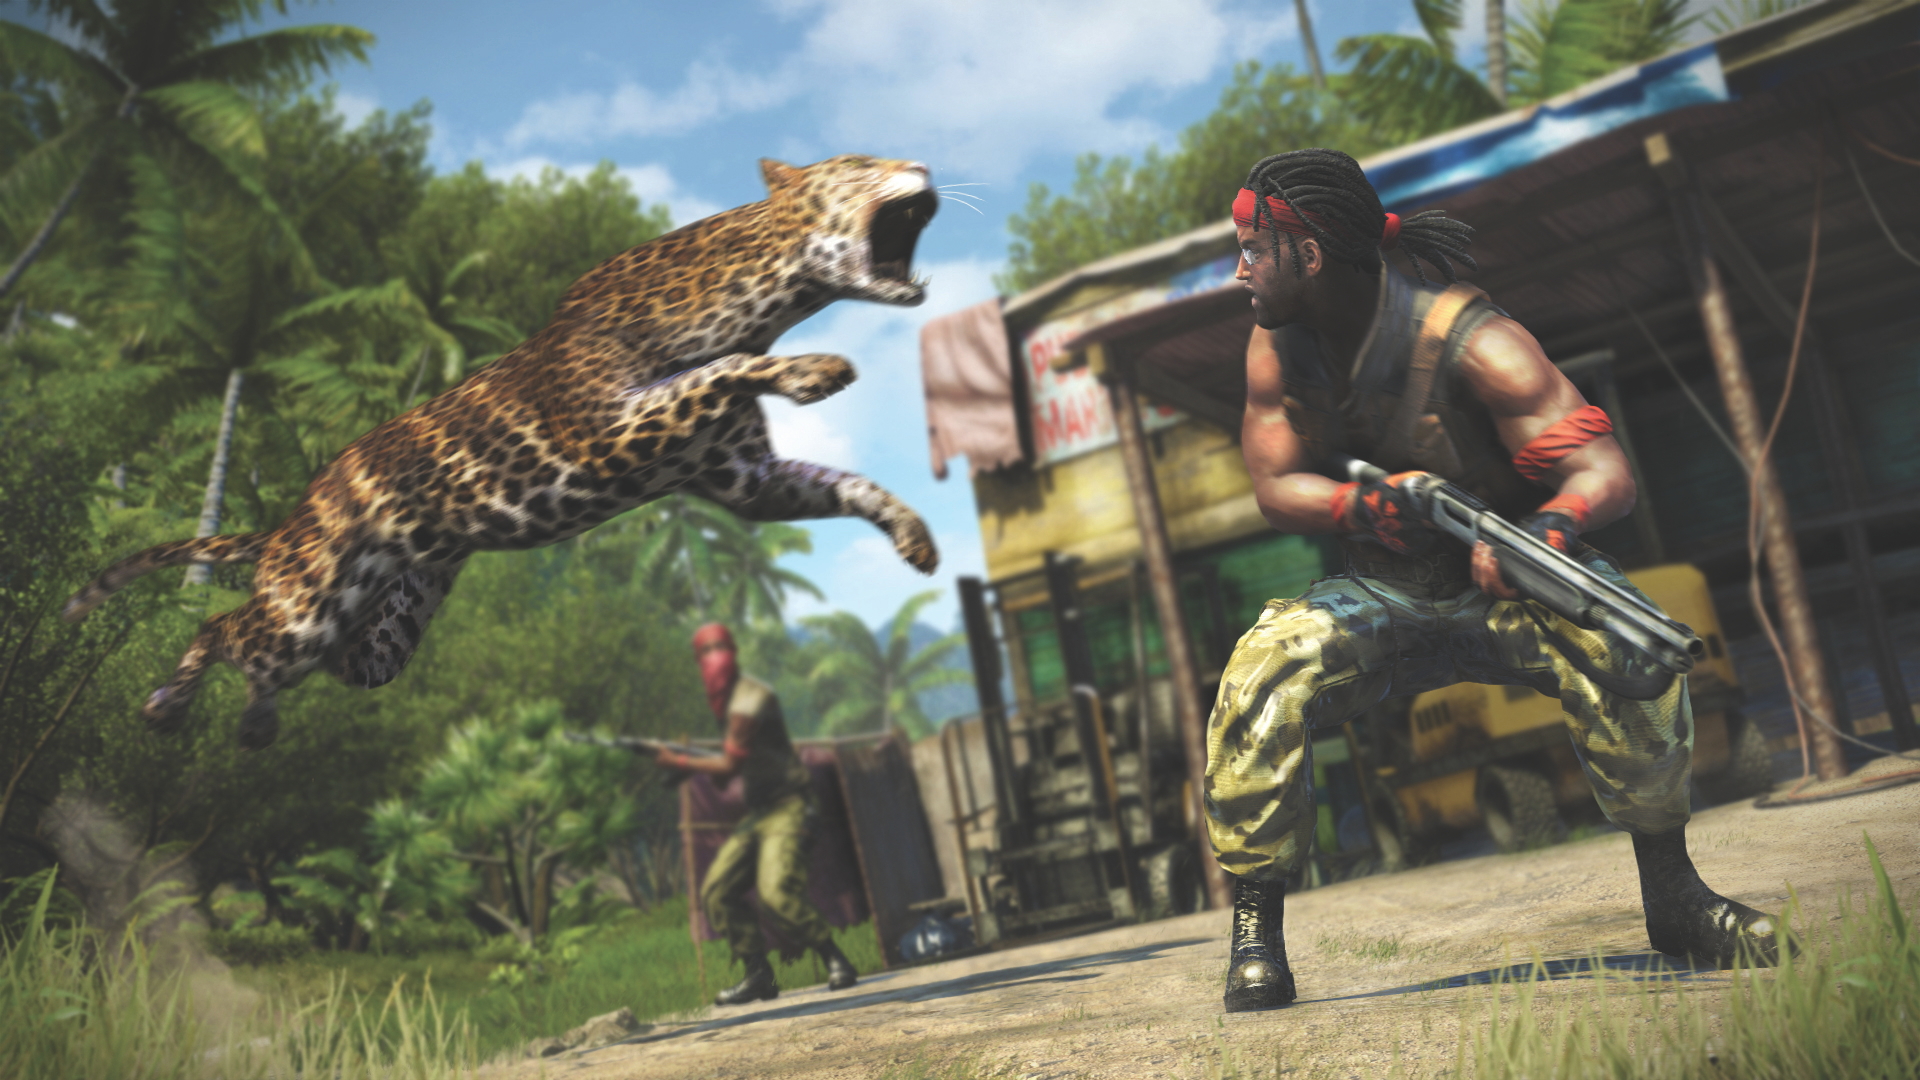  Far Cry 4 + Far Cry 5 (PS4) : Video Games